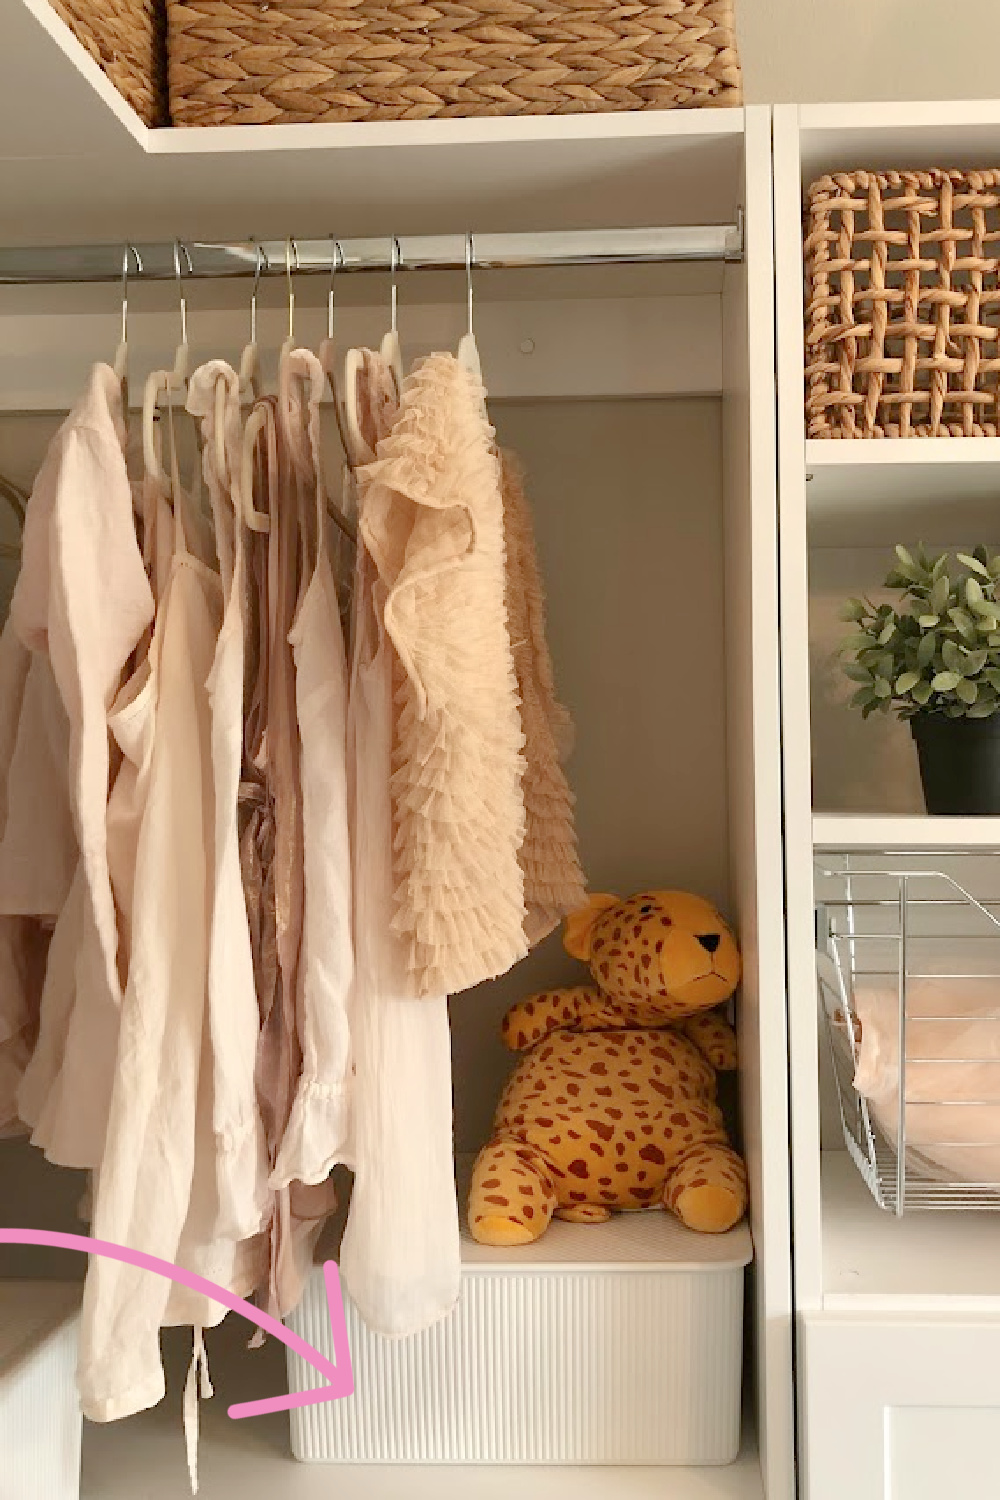 Superio white ribbed storage bin with lid in my organized closet - Hello Lovely Studio. #closetstorage #storagebins